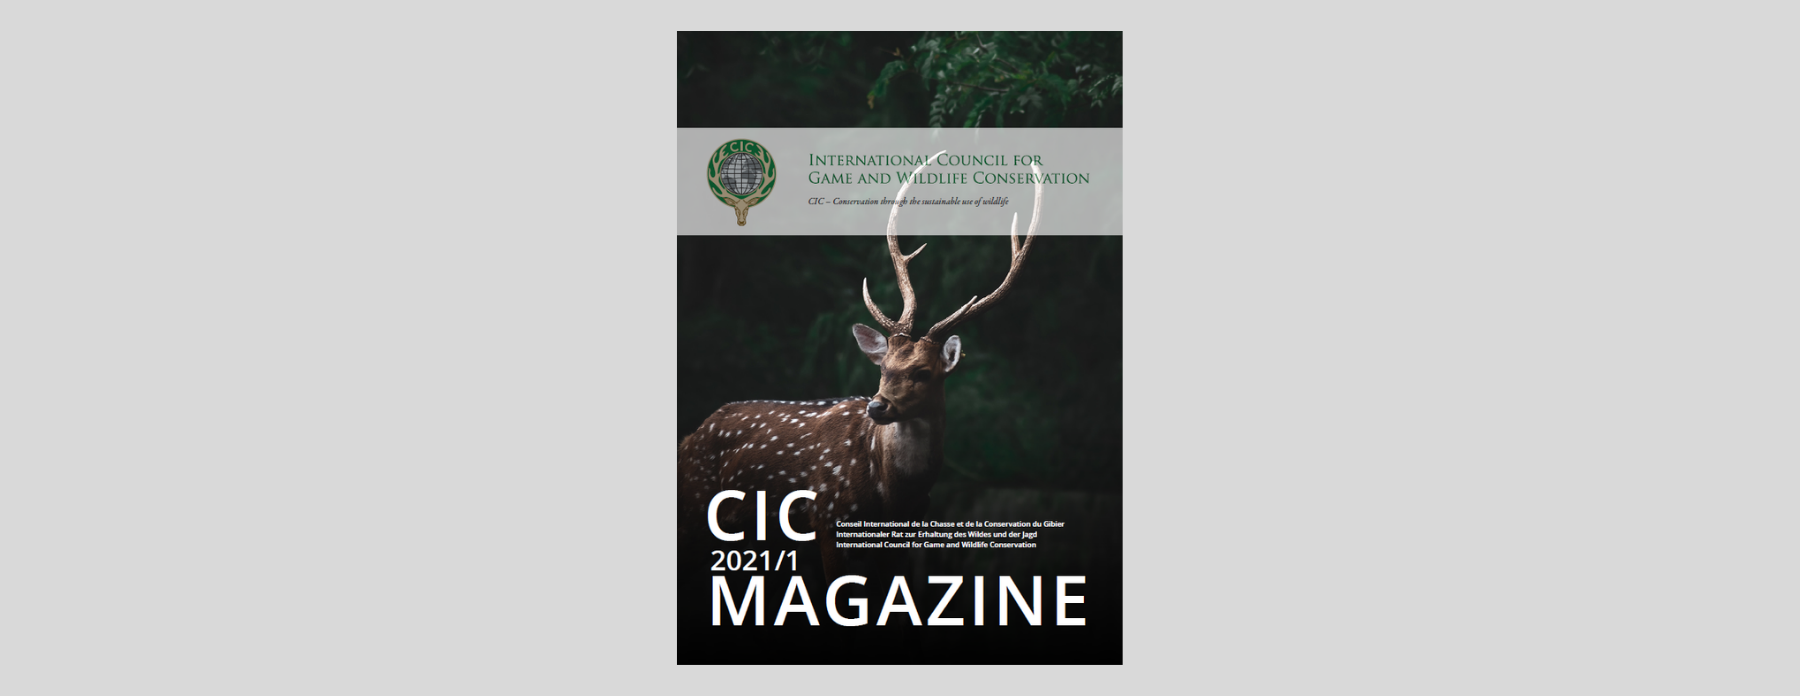 CIC Digital Magazine <br> 2 August 2021